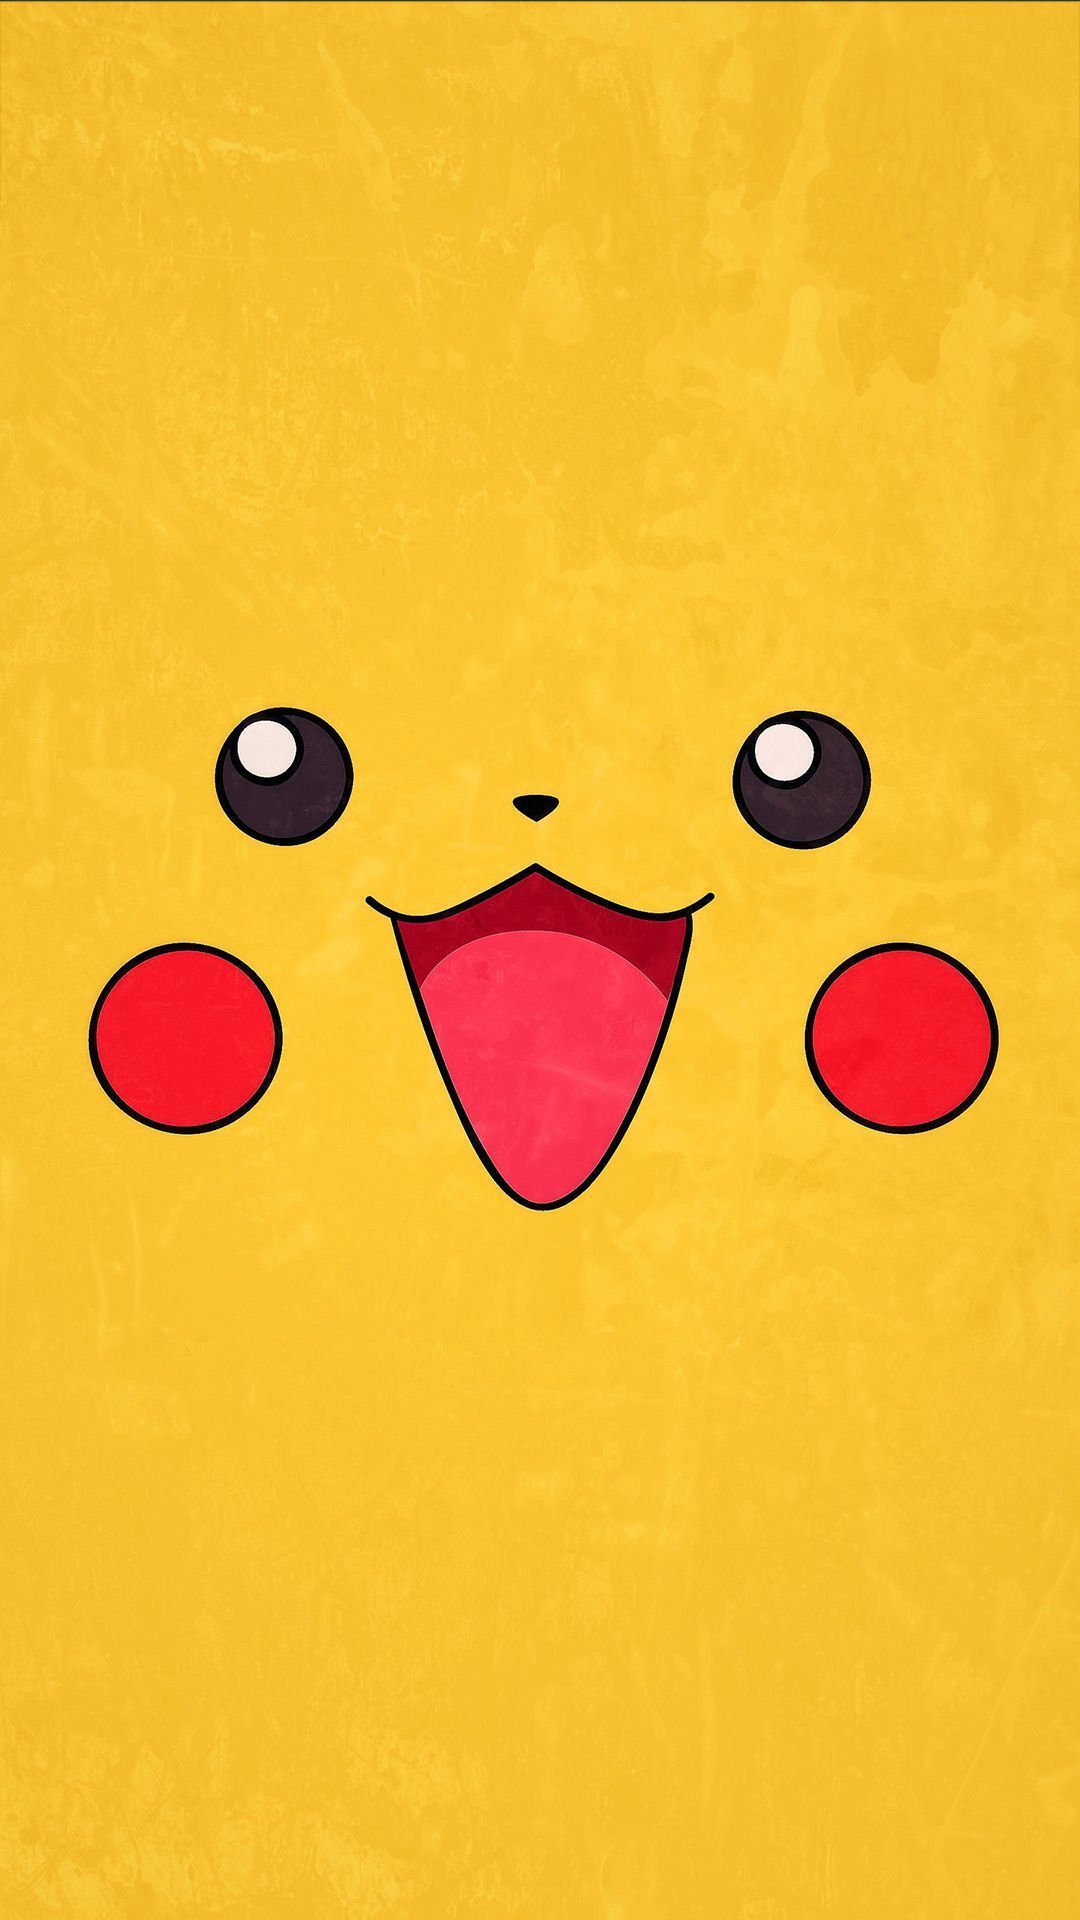 pikachu phone wallpaper,yellow,facial expression,red,pink,cartoon